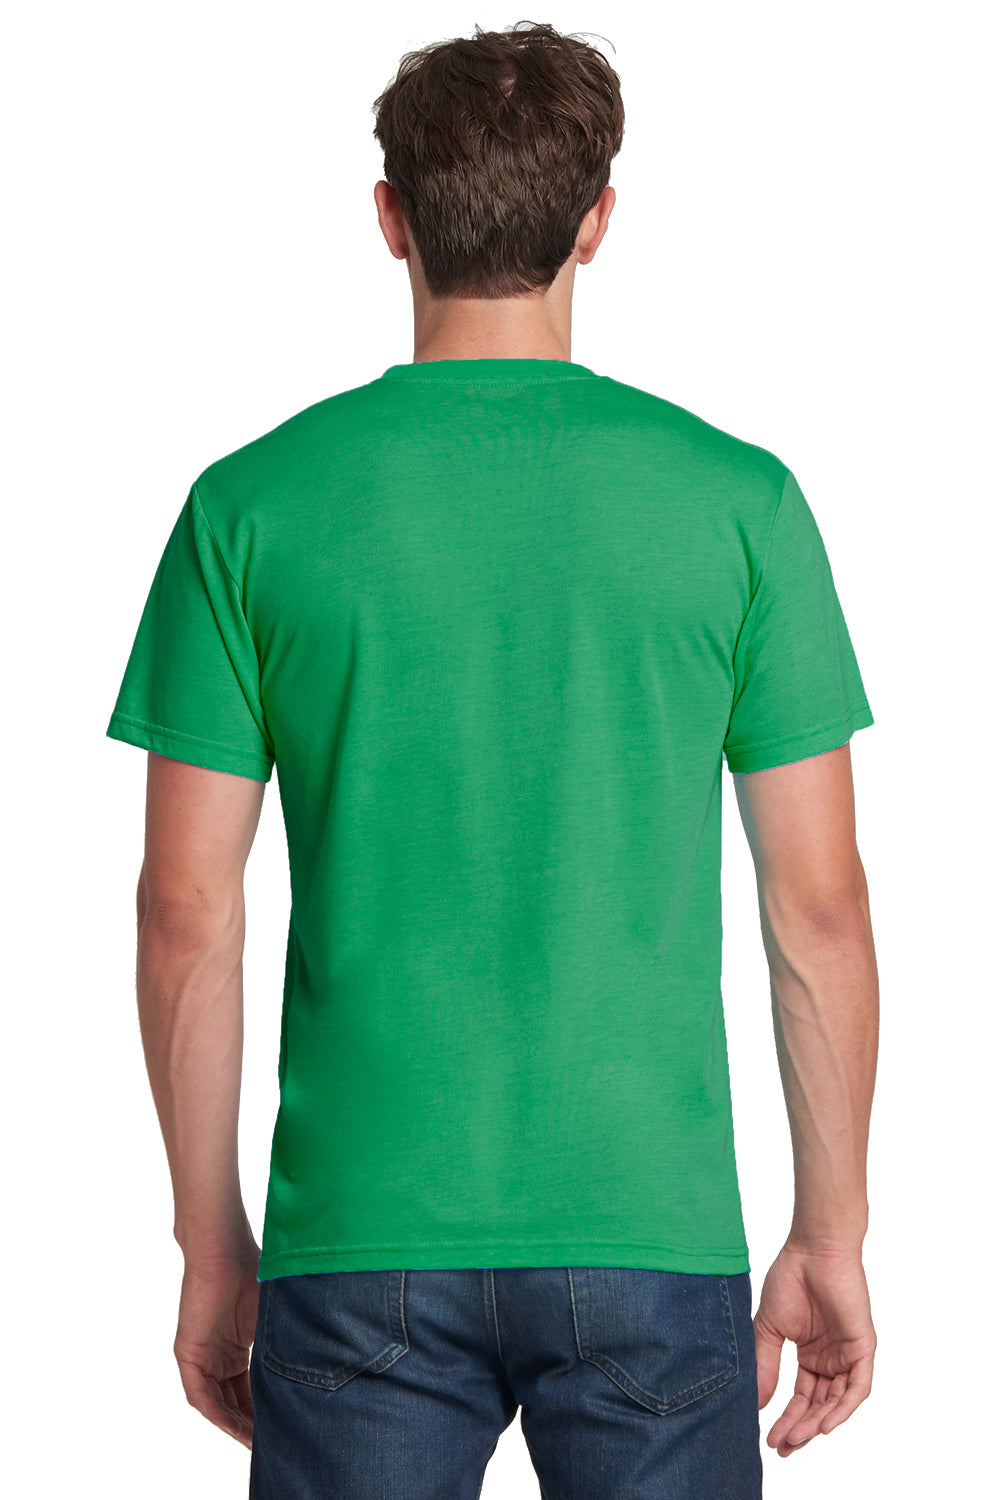 Next Level 6010 Mens Jersey Short Sleeve Crewneck T-Shirt Envy Green Back